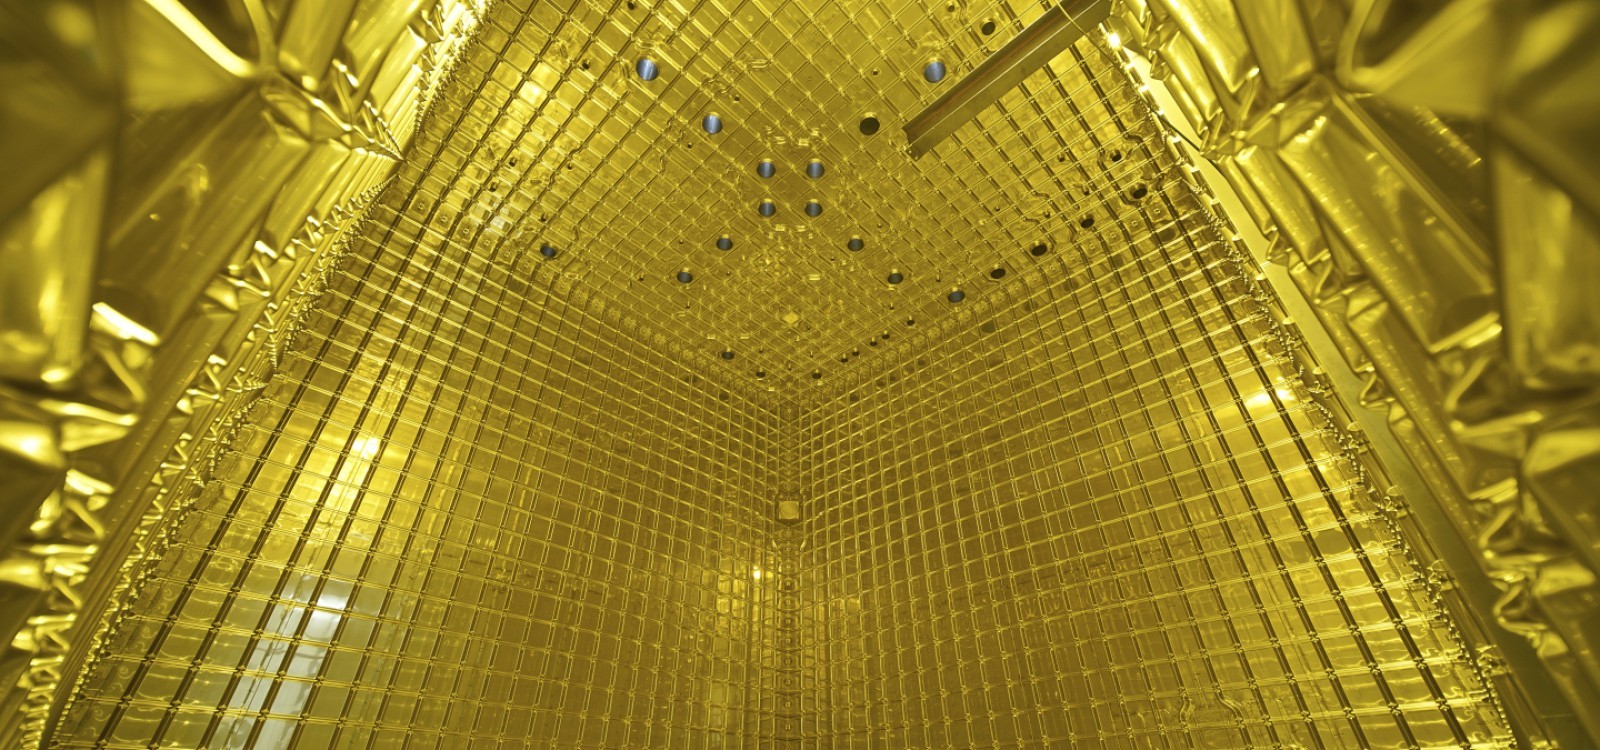 ProtoDune experiment at CERN